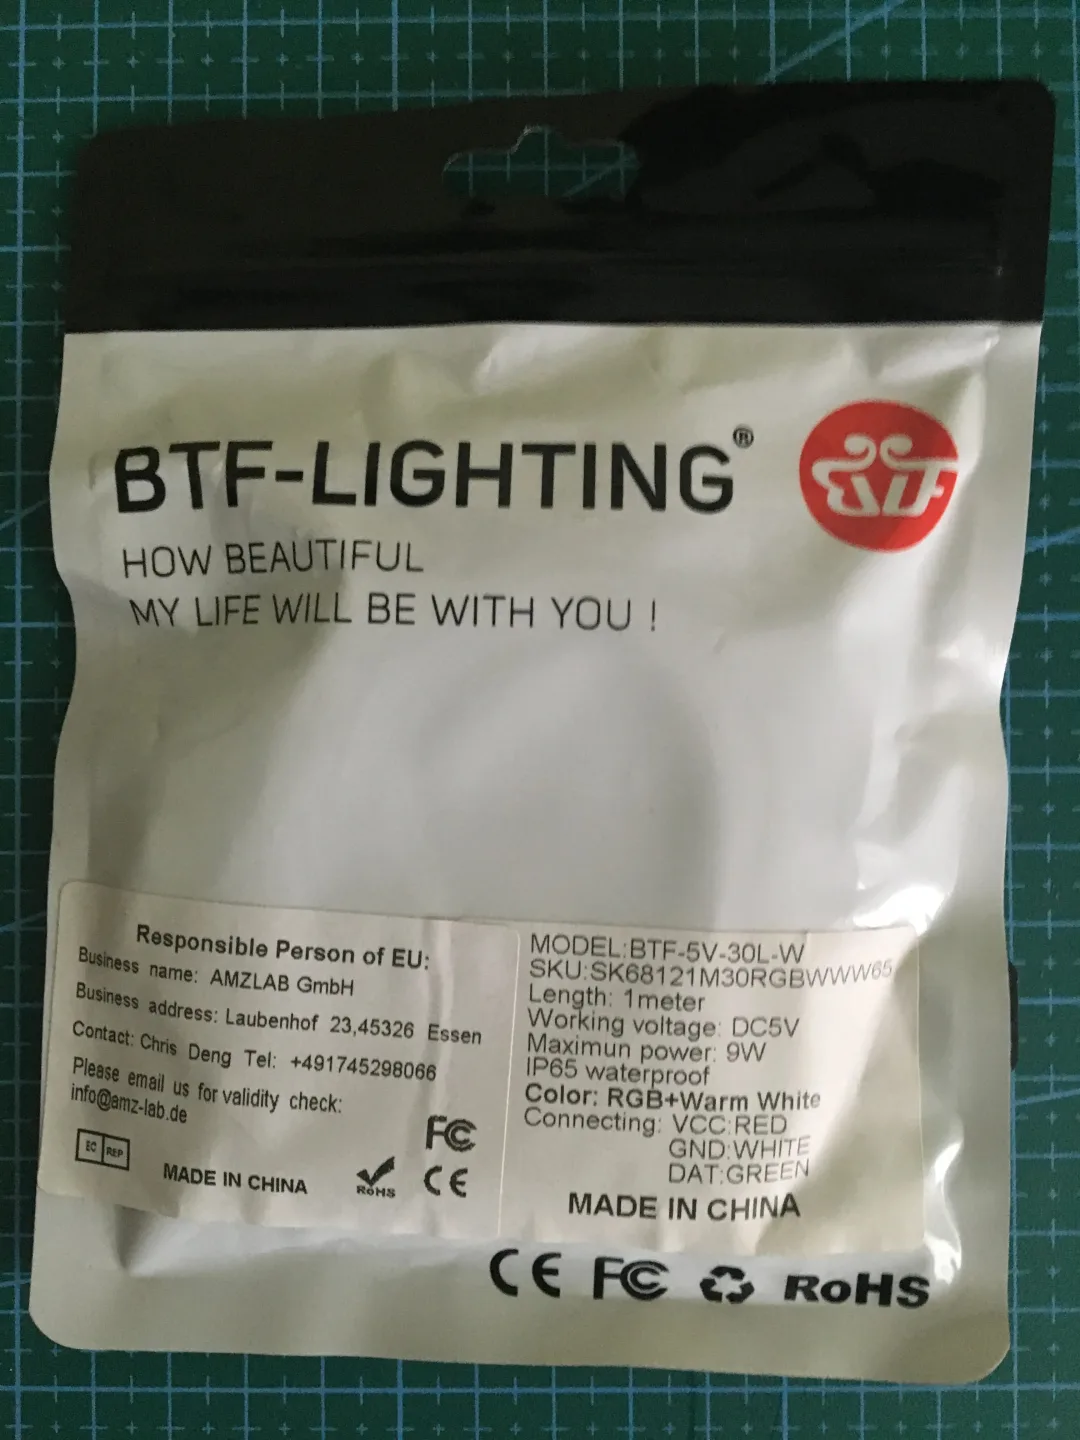 BTF-LIGHTING WS2812B 100PCS 5050SMD Individually Addressable Smart RGB LED  Pixel for Arduino 5V DC Single 1-led LED Module Pixels Color Light little